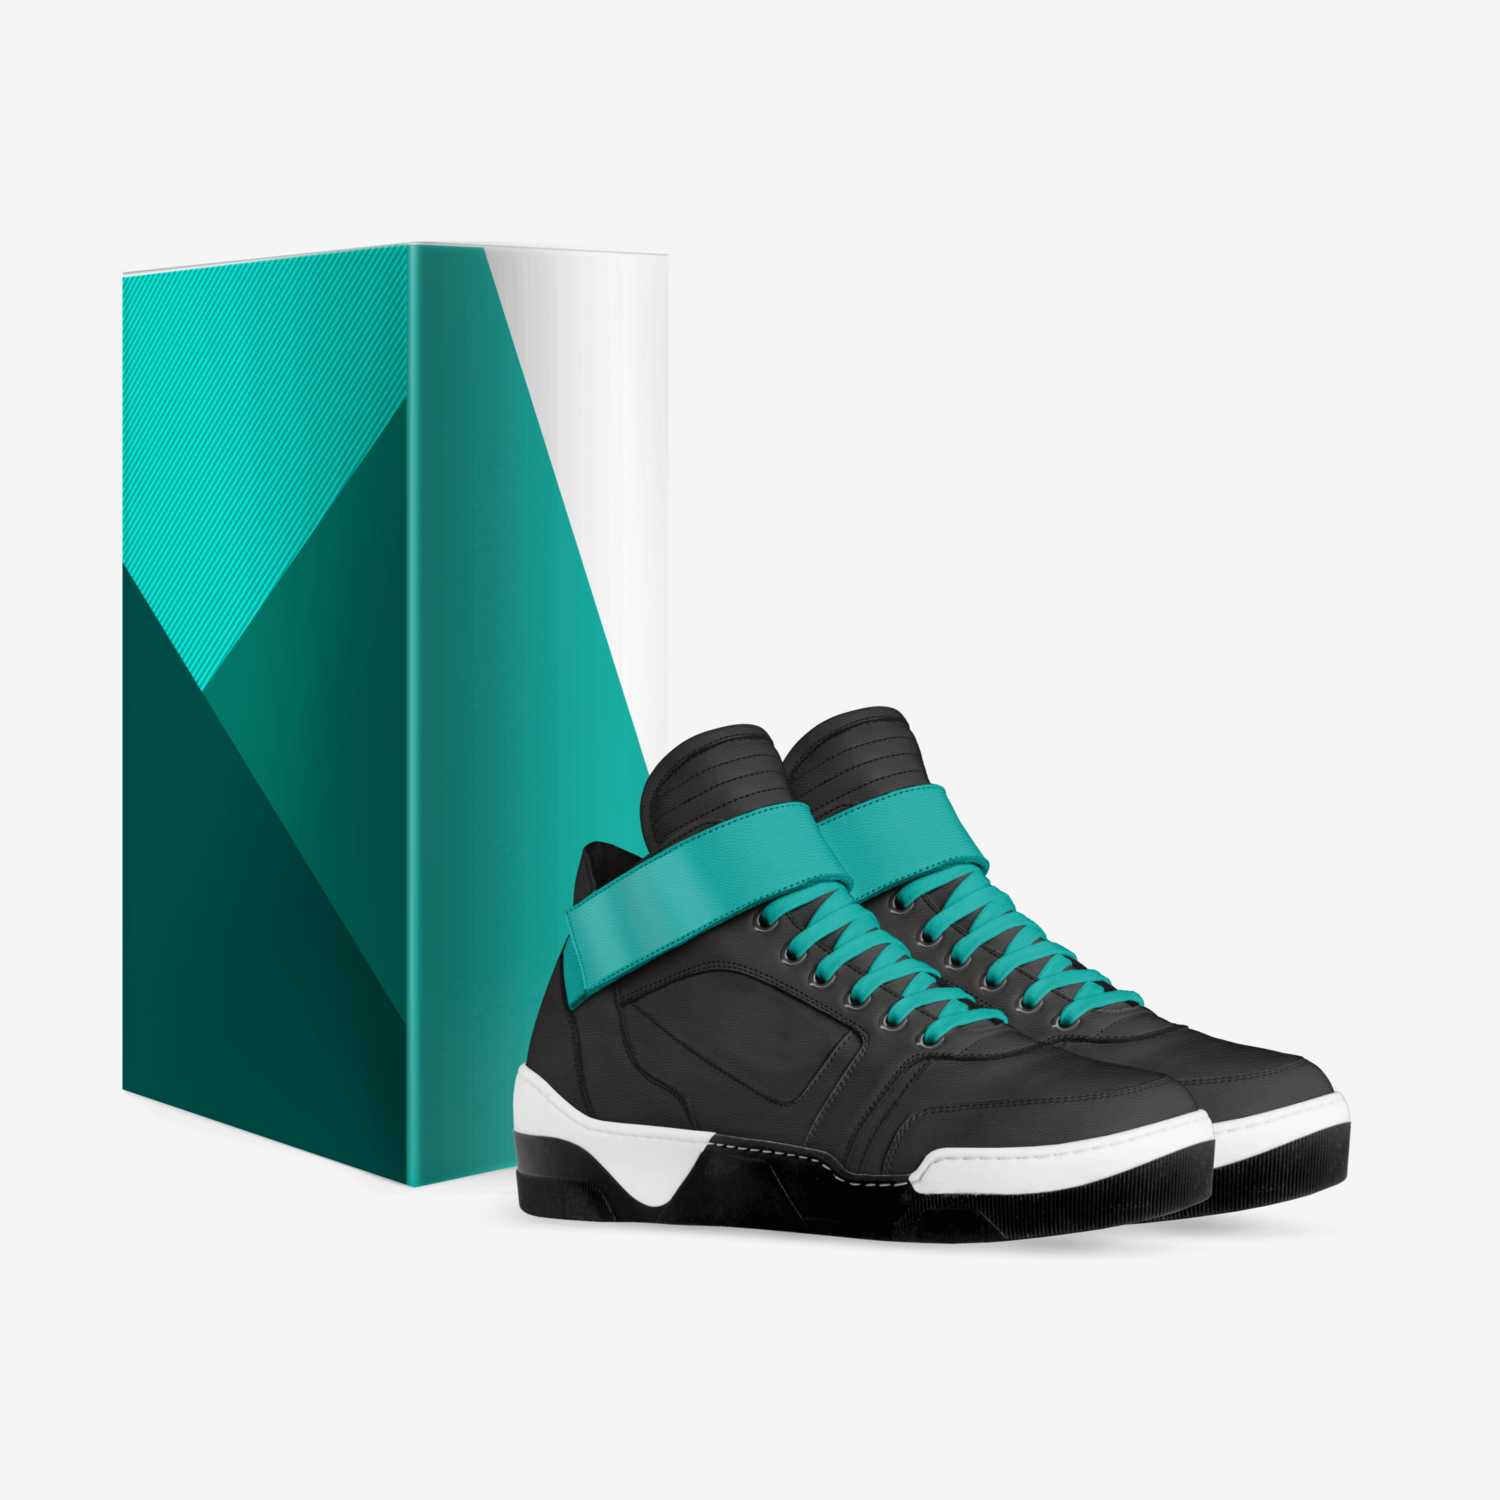 drakoz custom made in Italy shoes by Marius Daniel | Box view